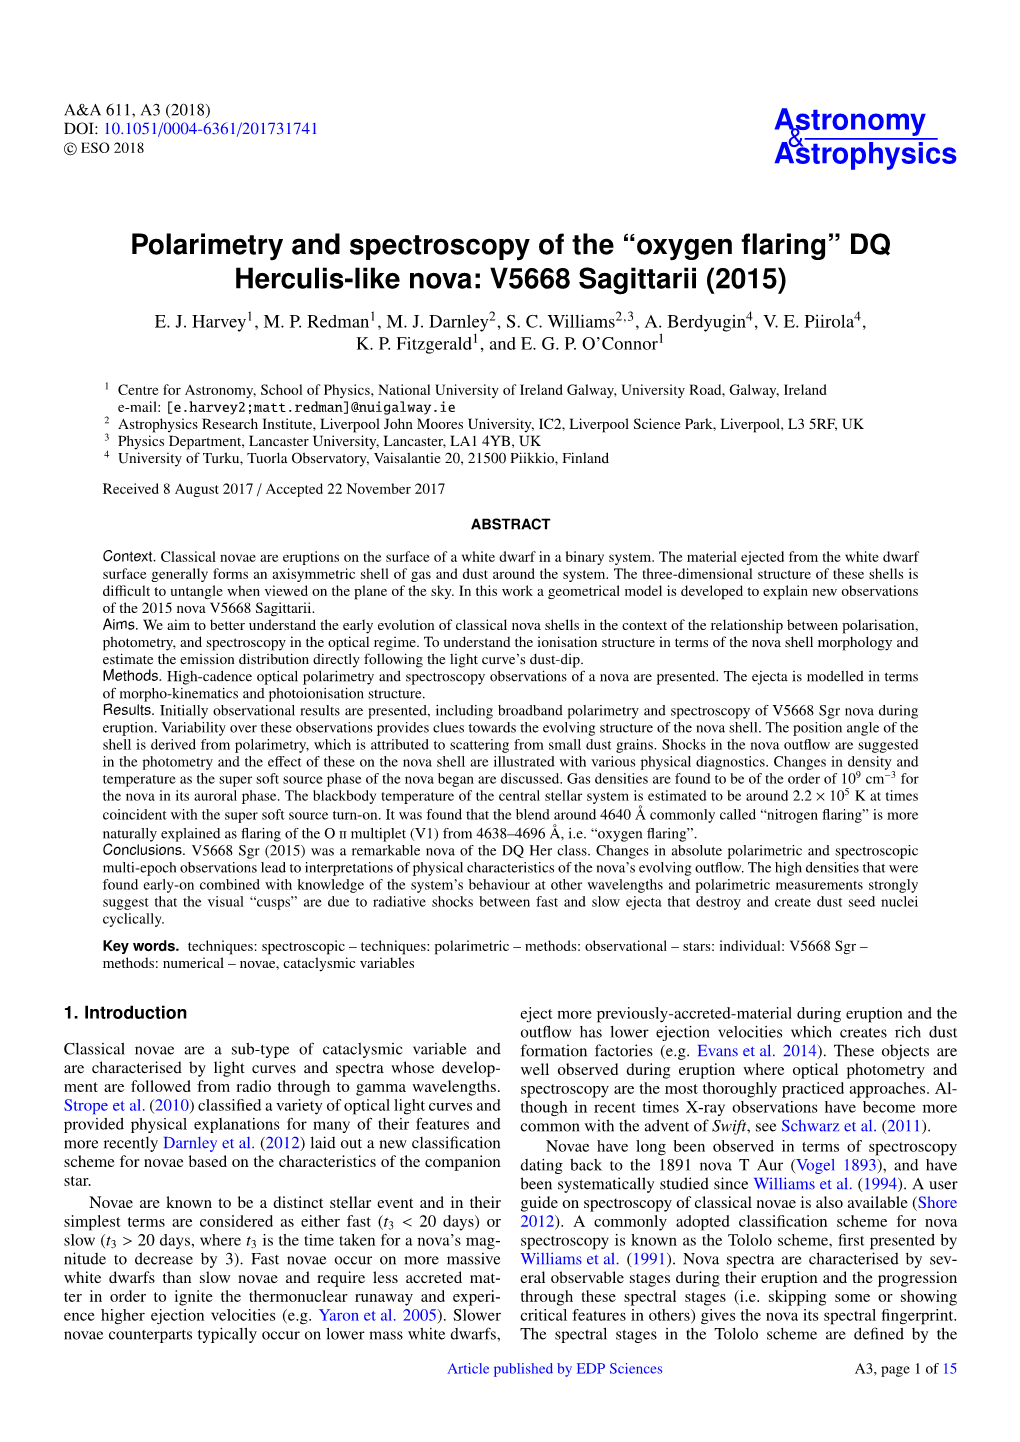 Polarimetry and Spectroscopy of the “Oxygen Flaring” DQ Herculis-Like